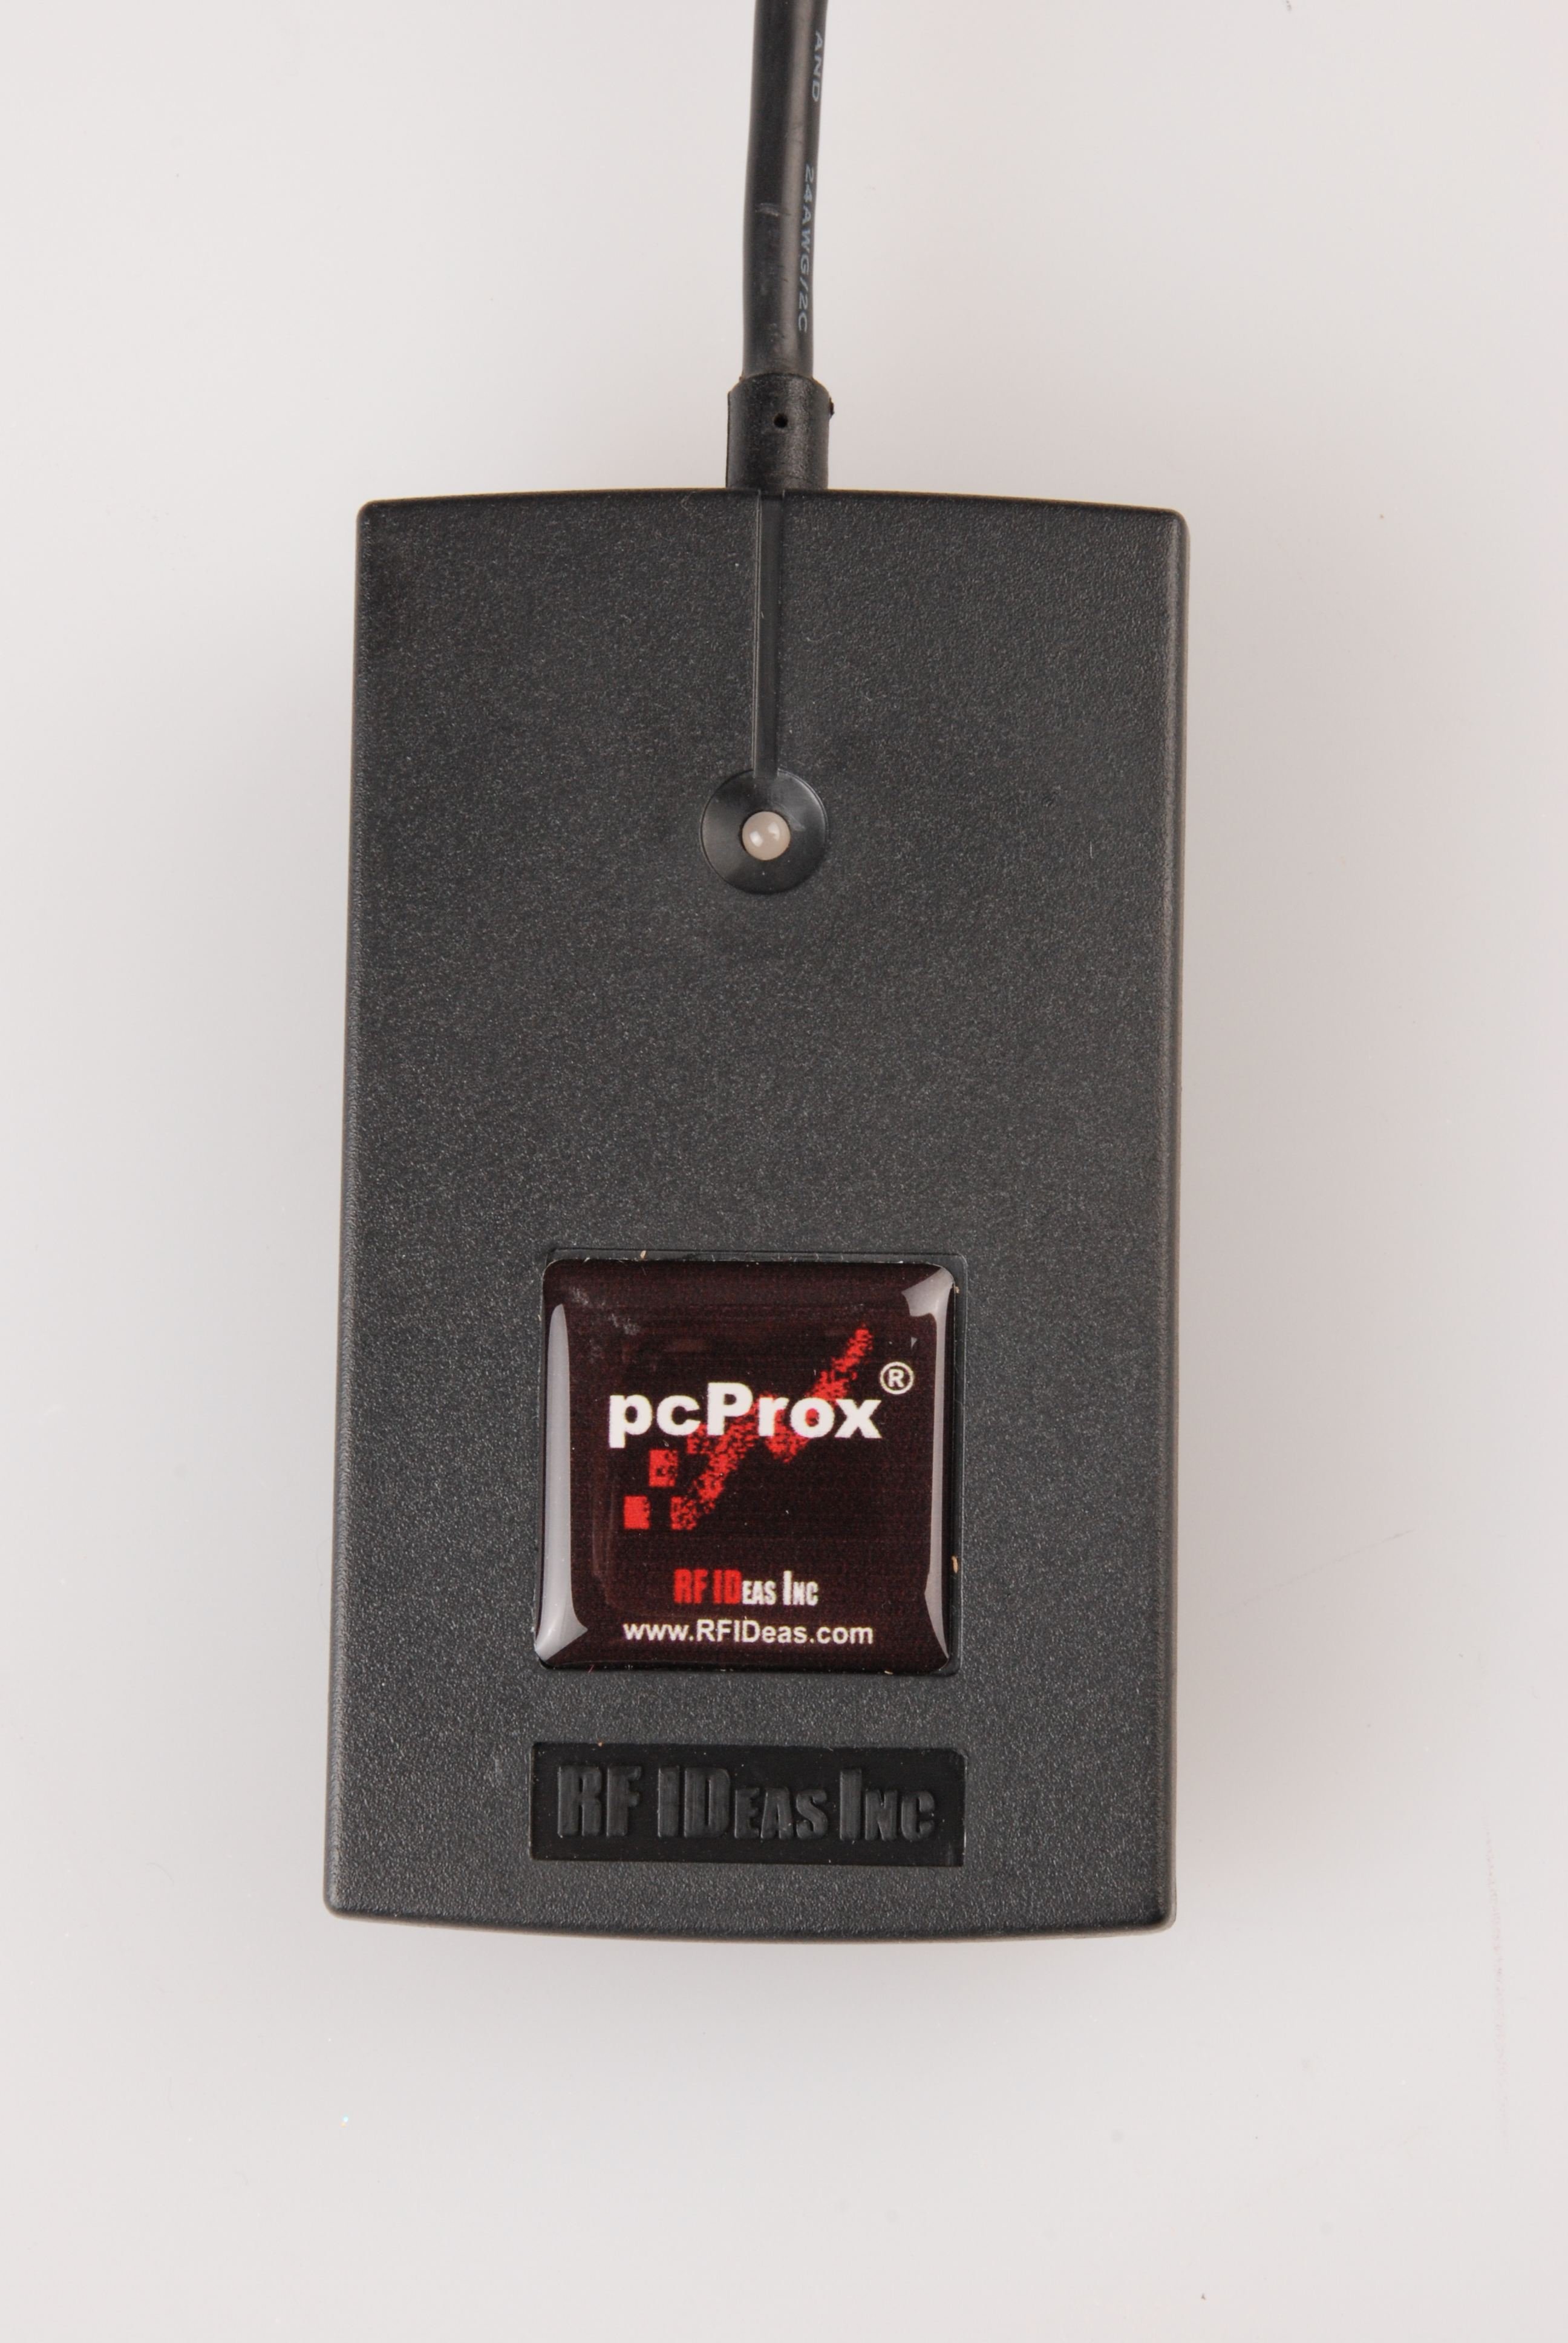 pcProx(R) 